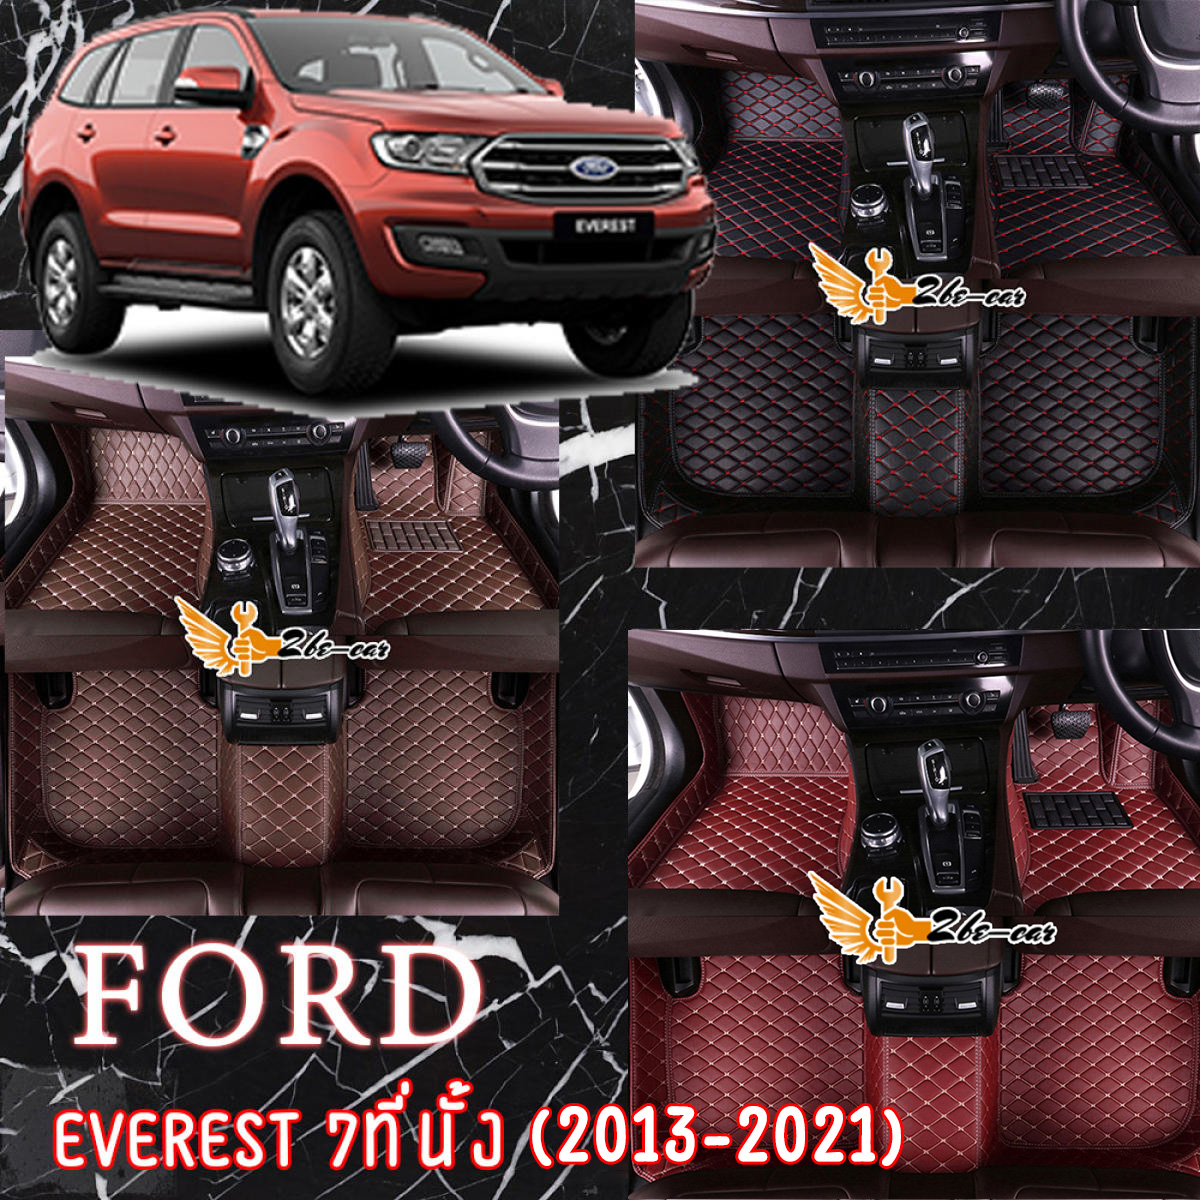 2Be-car พรมปูรถยนต์ 6D ฟอร์ด Ford Everest (2013-2021)